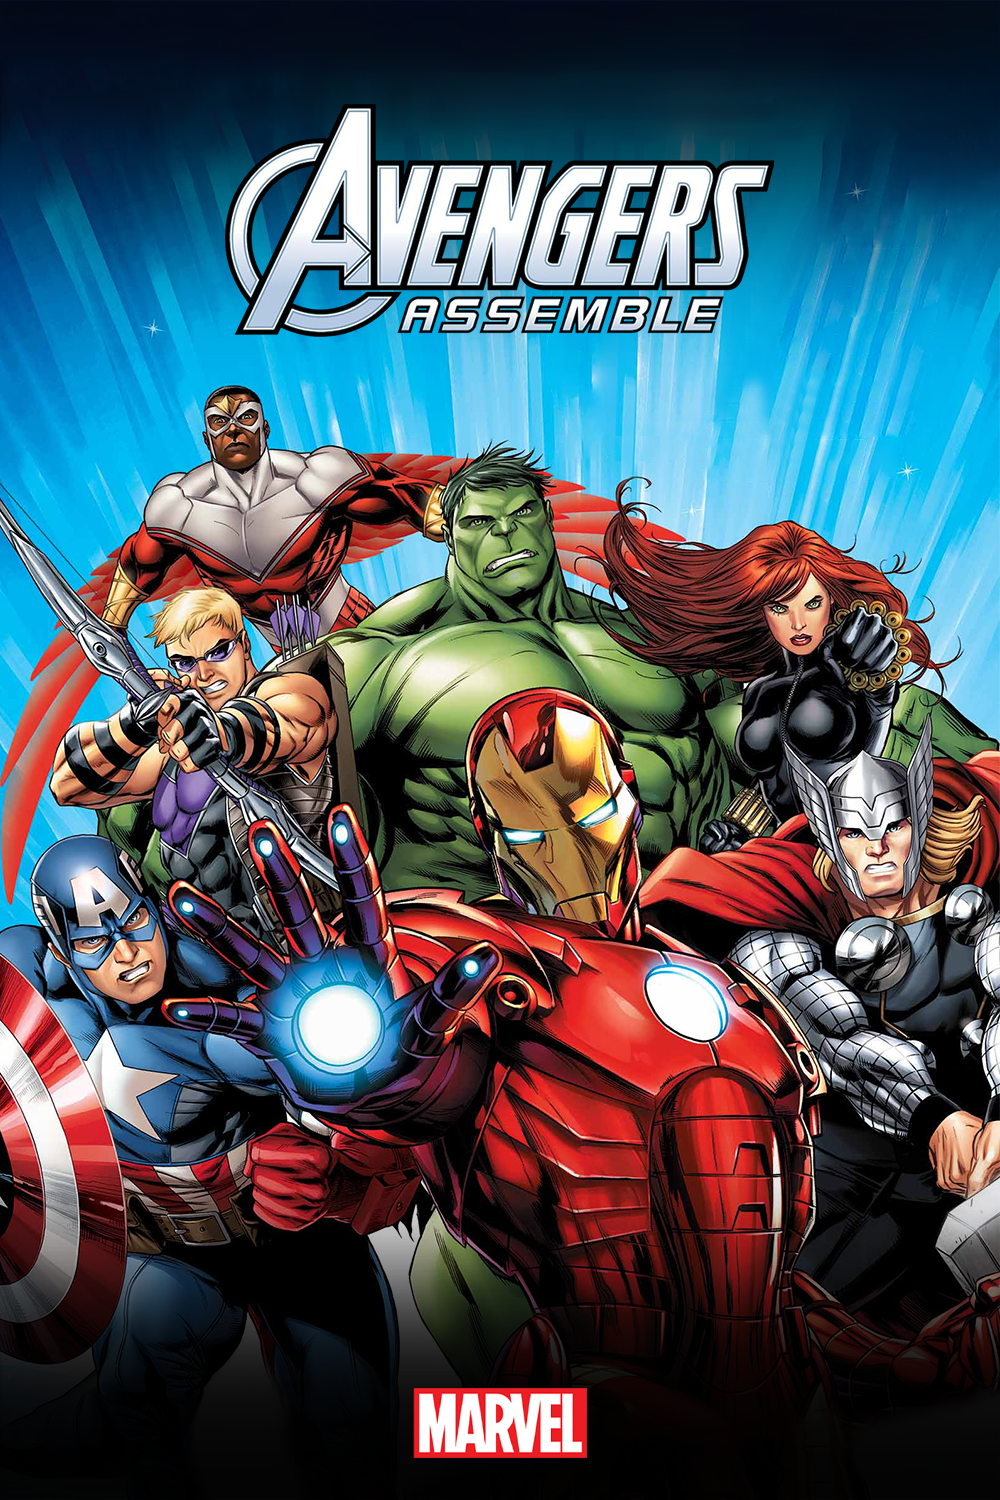 Avengers assemble